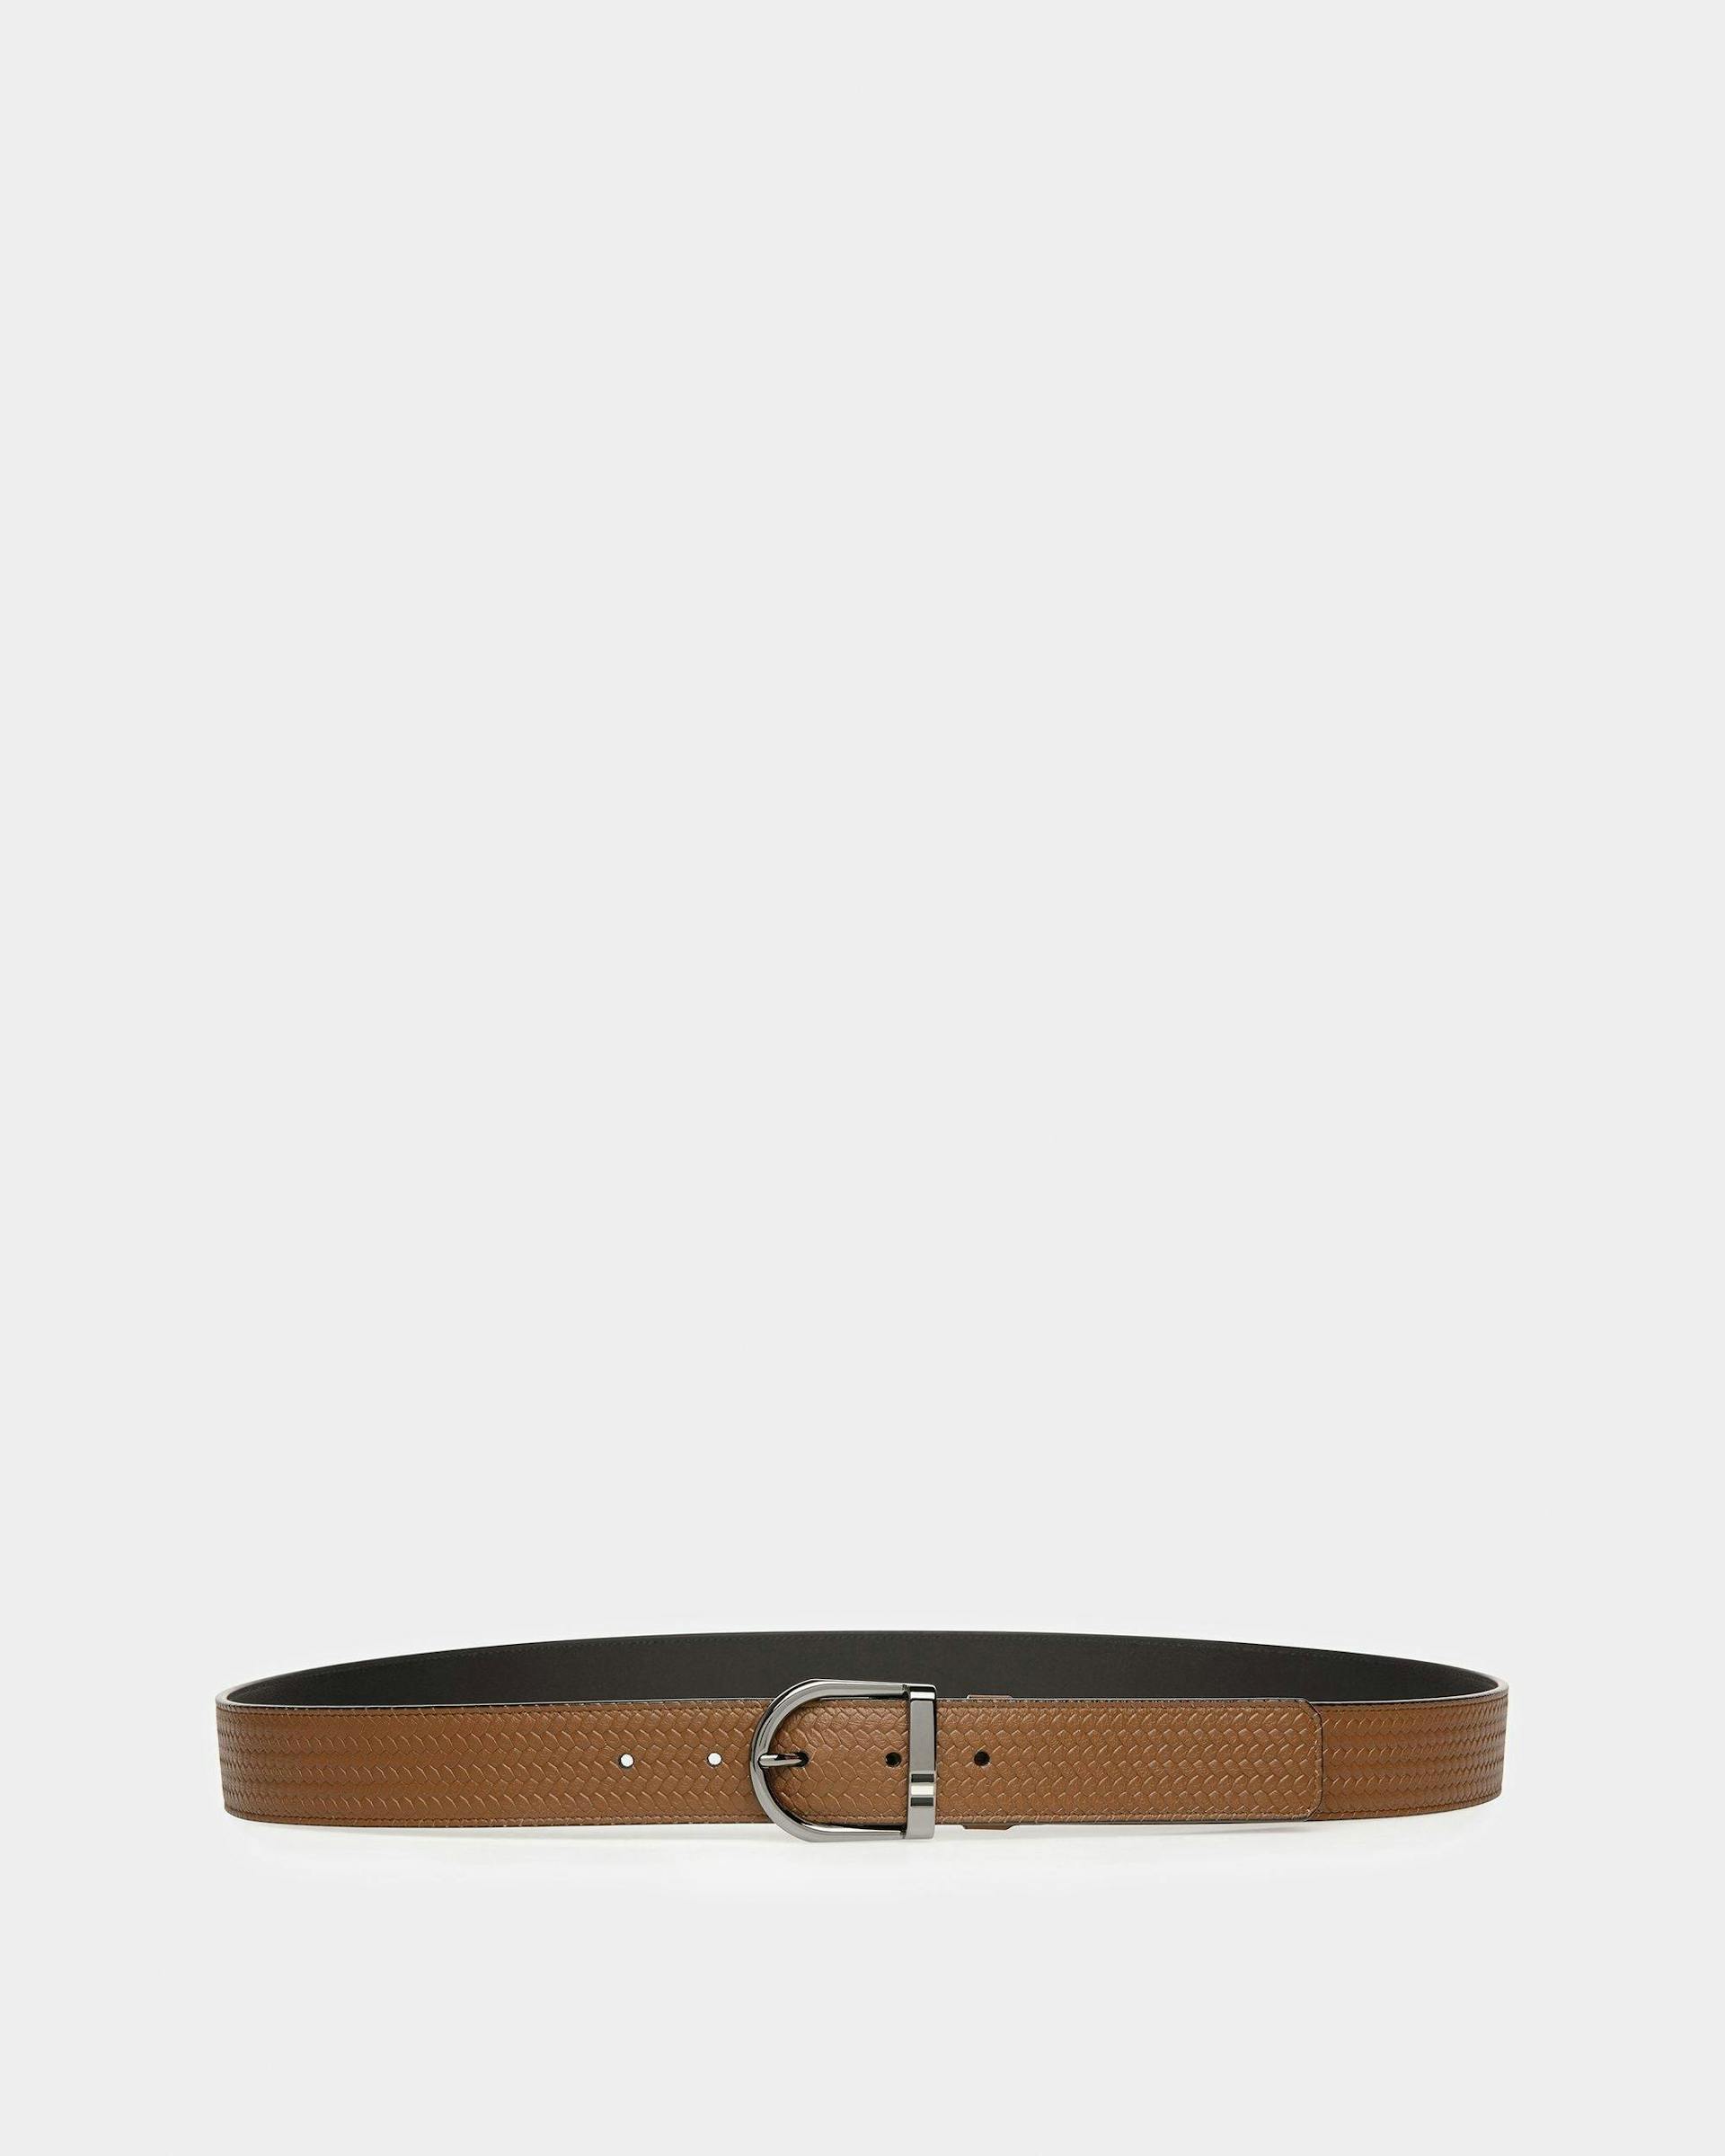 Darkon Leather Belt In Brown And Black - Men's - Bally - 01